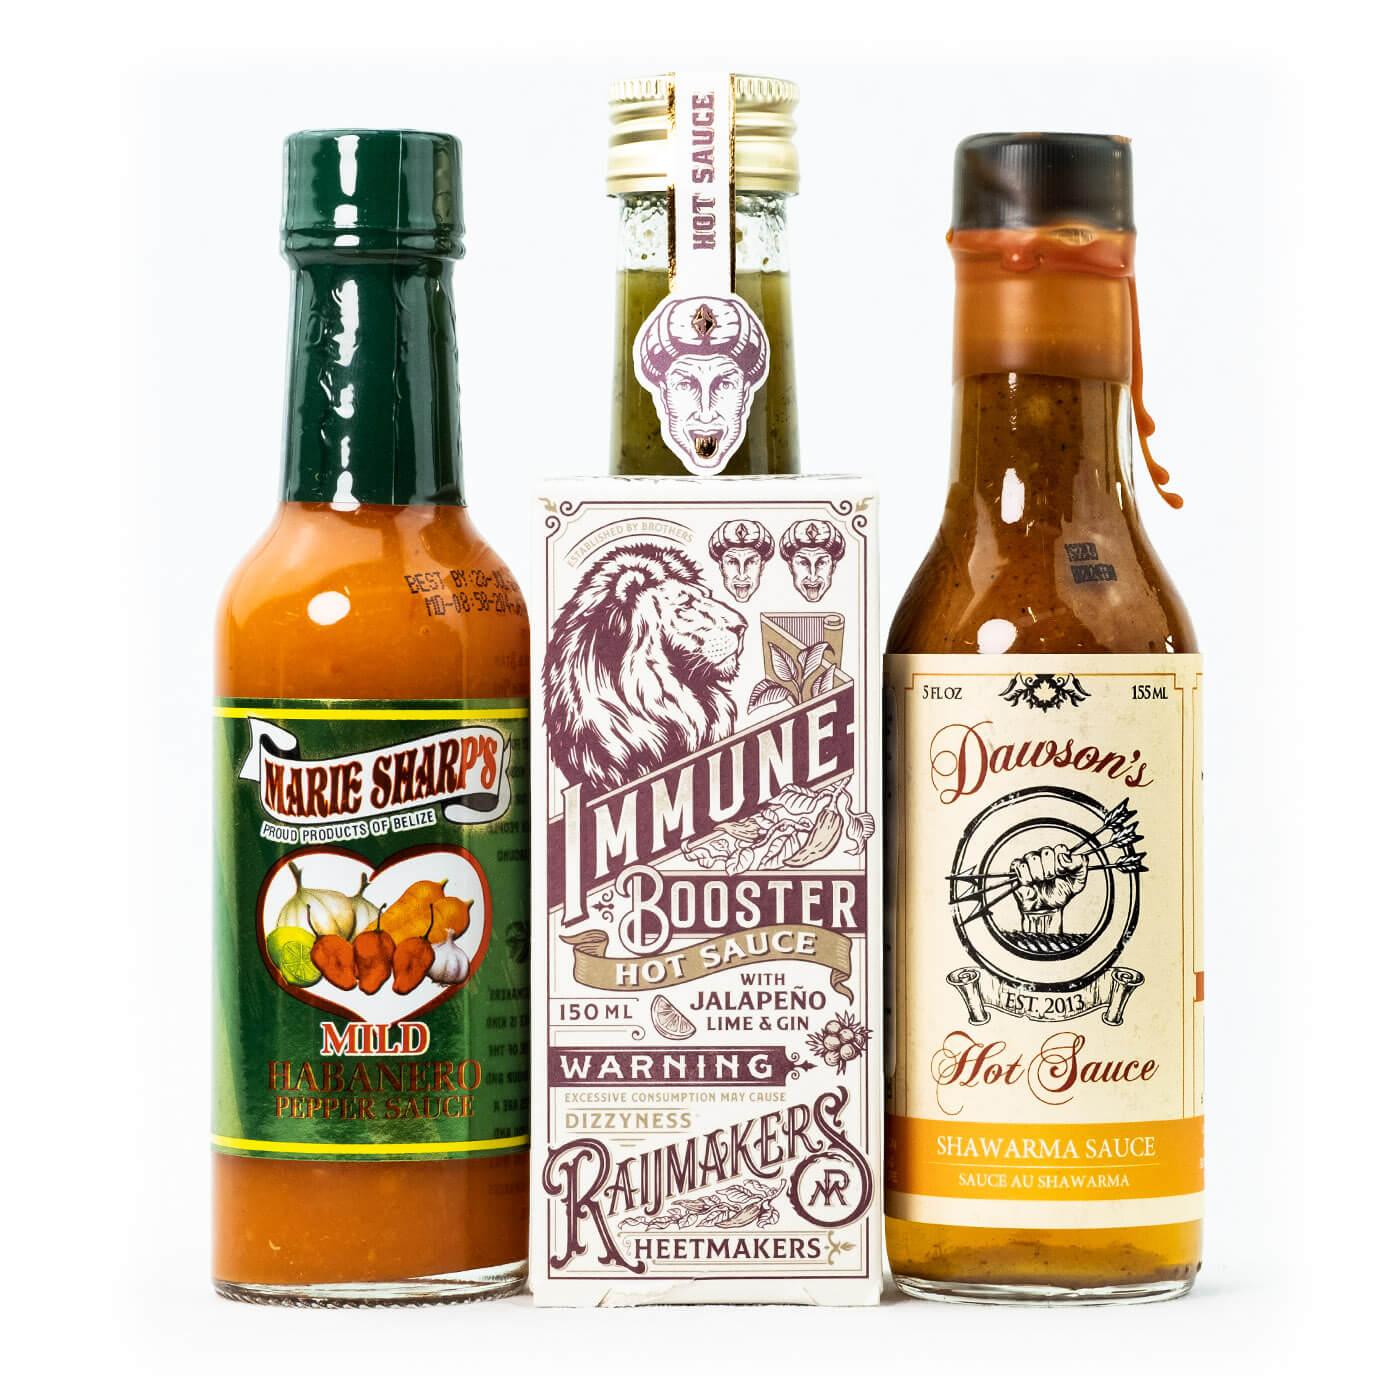 Sriracha Jalapeno Gourmet Hot Sauce -Made in Syracuse, vegan